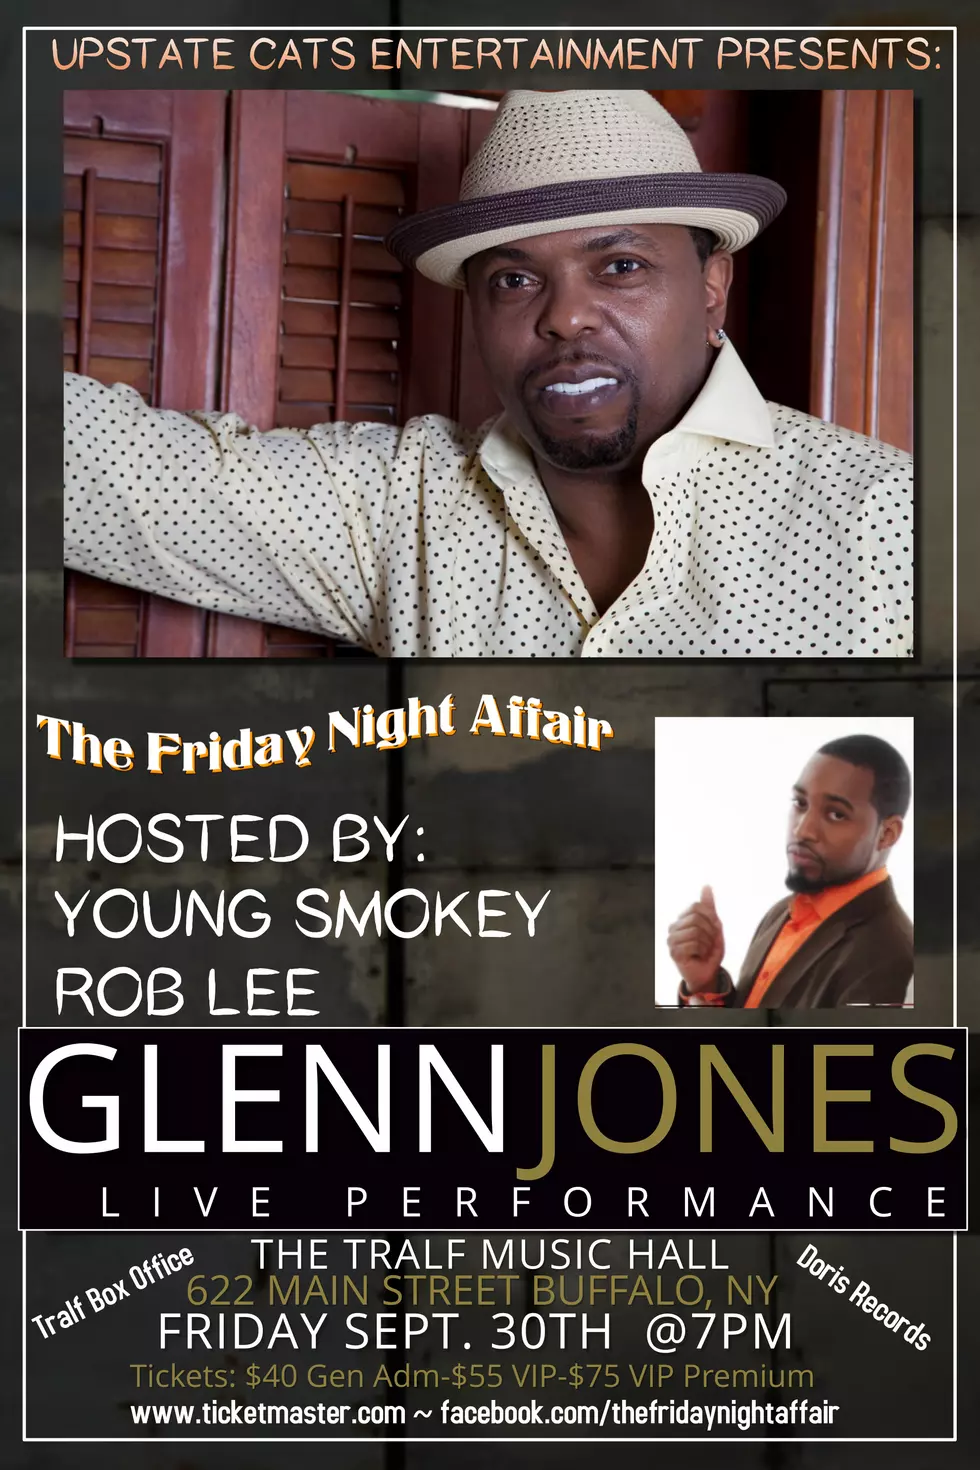 The Friday Night Affair with Glenn Jones